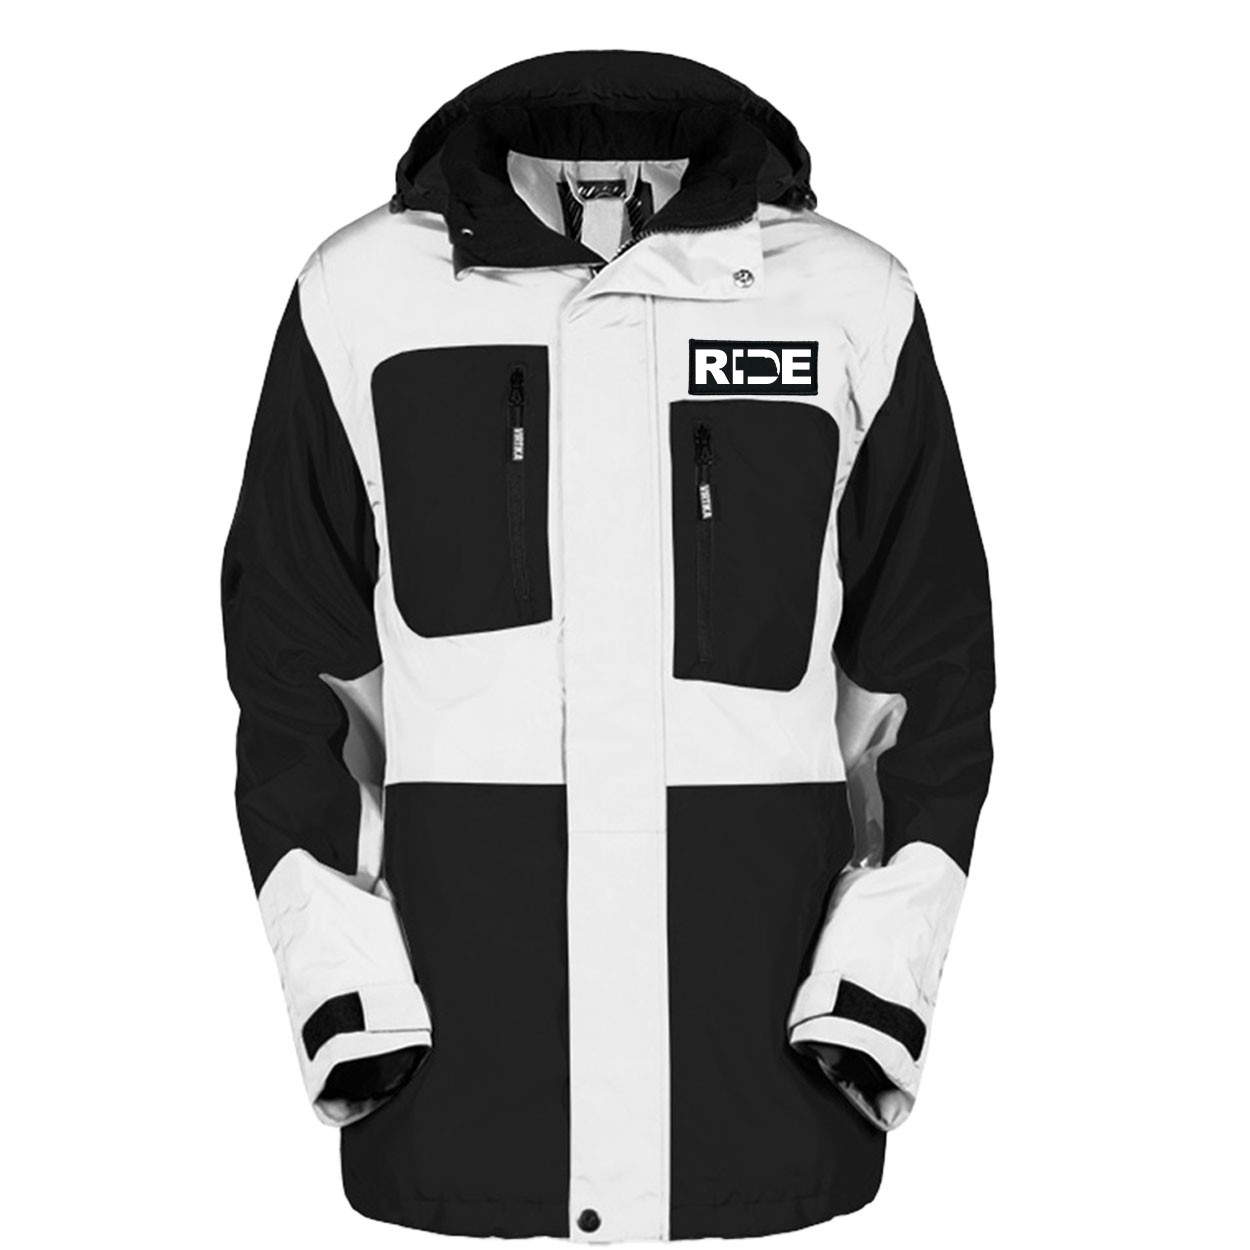 Ride Nebraska Pro Waterproof Breathable Winter Virtika Jacket Black/White (White Logo)